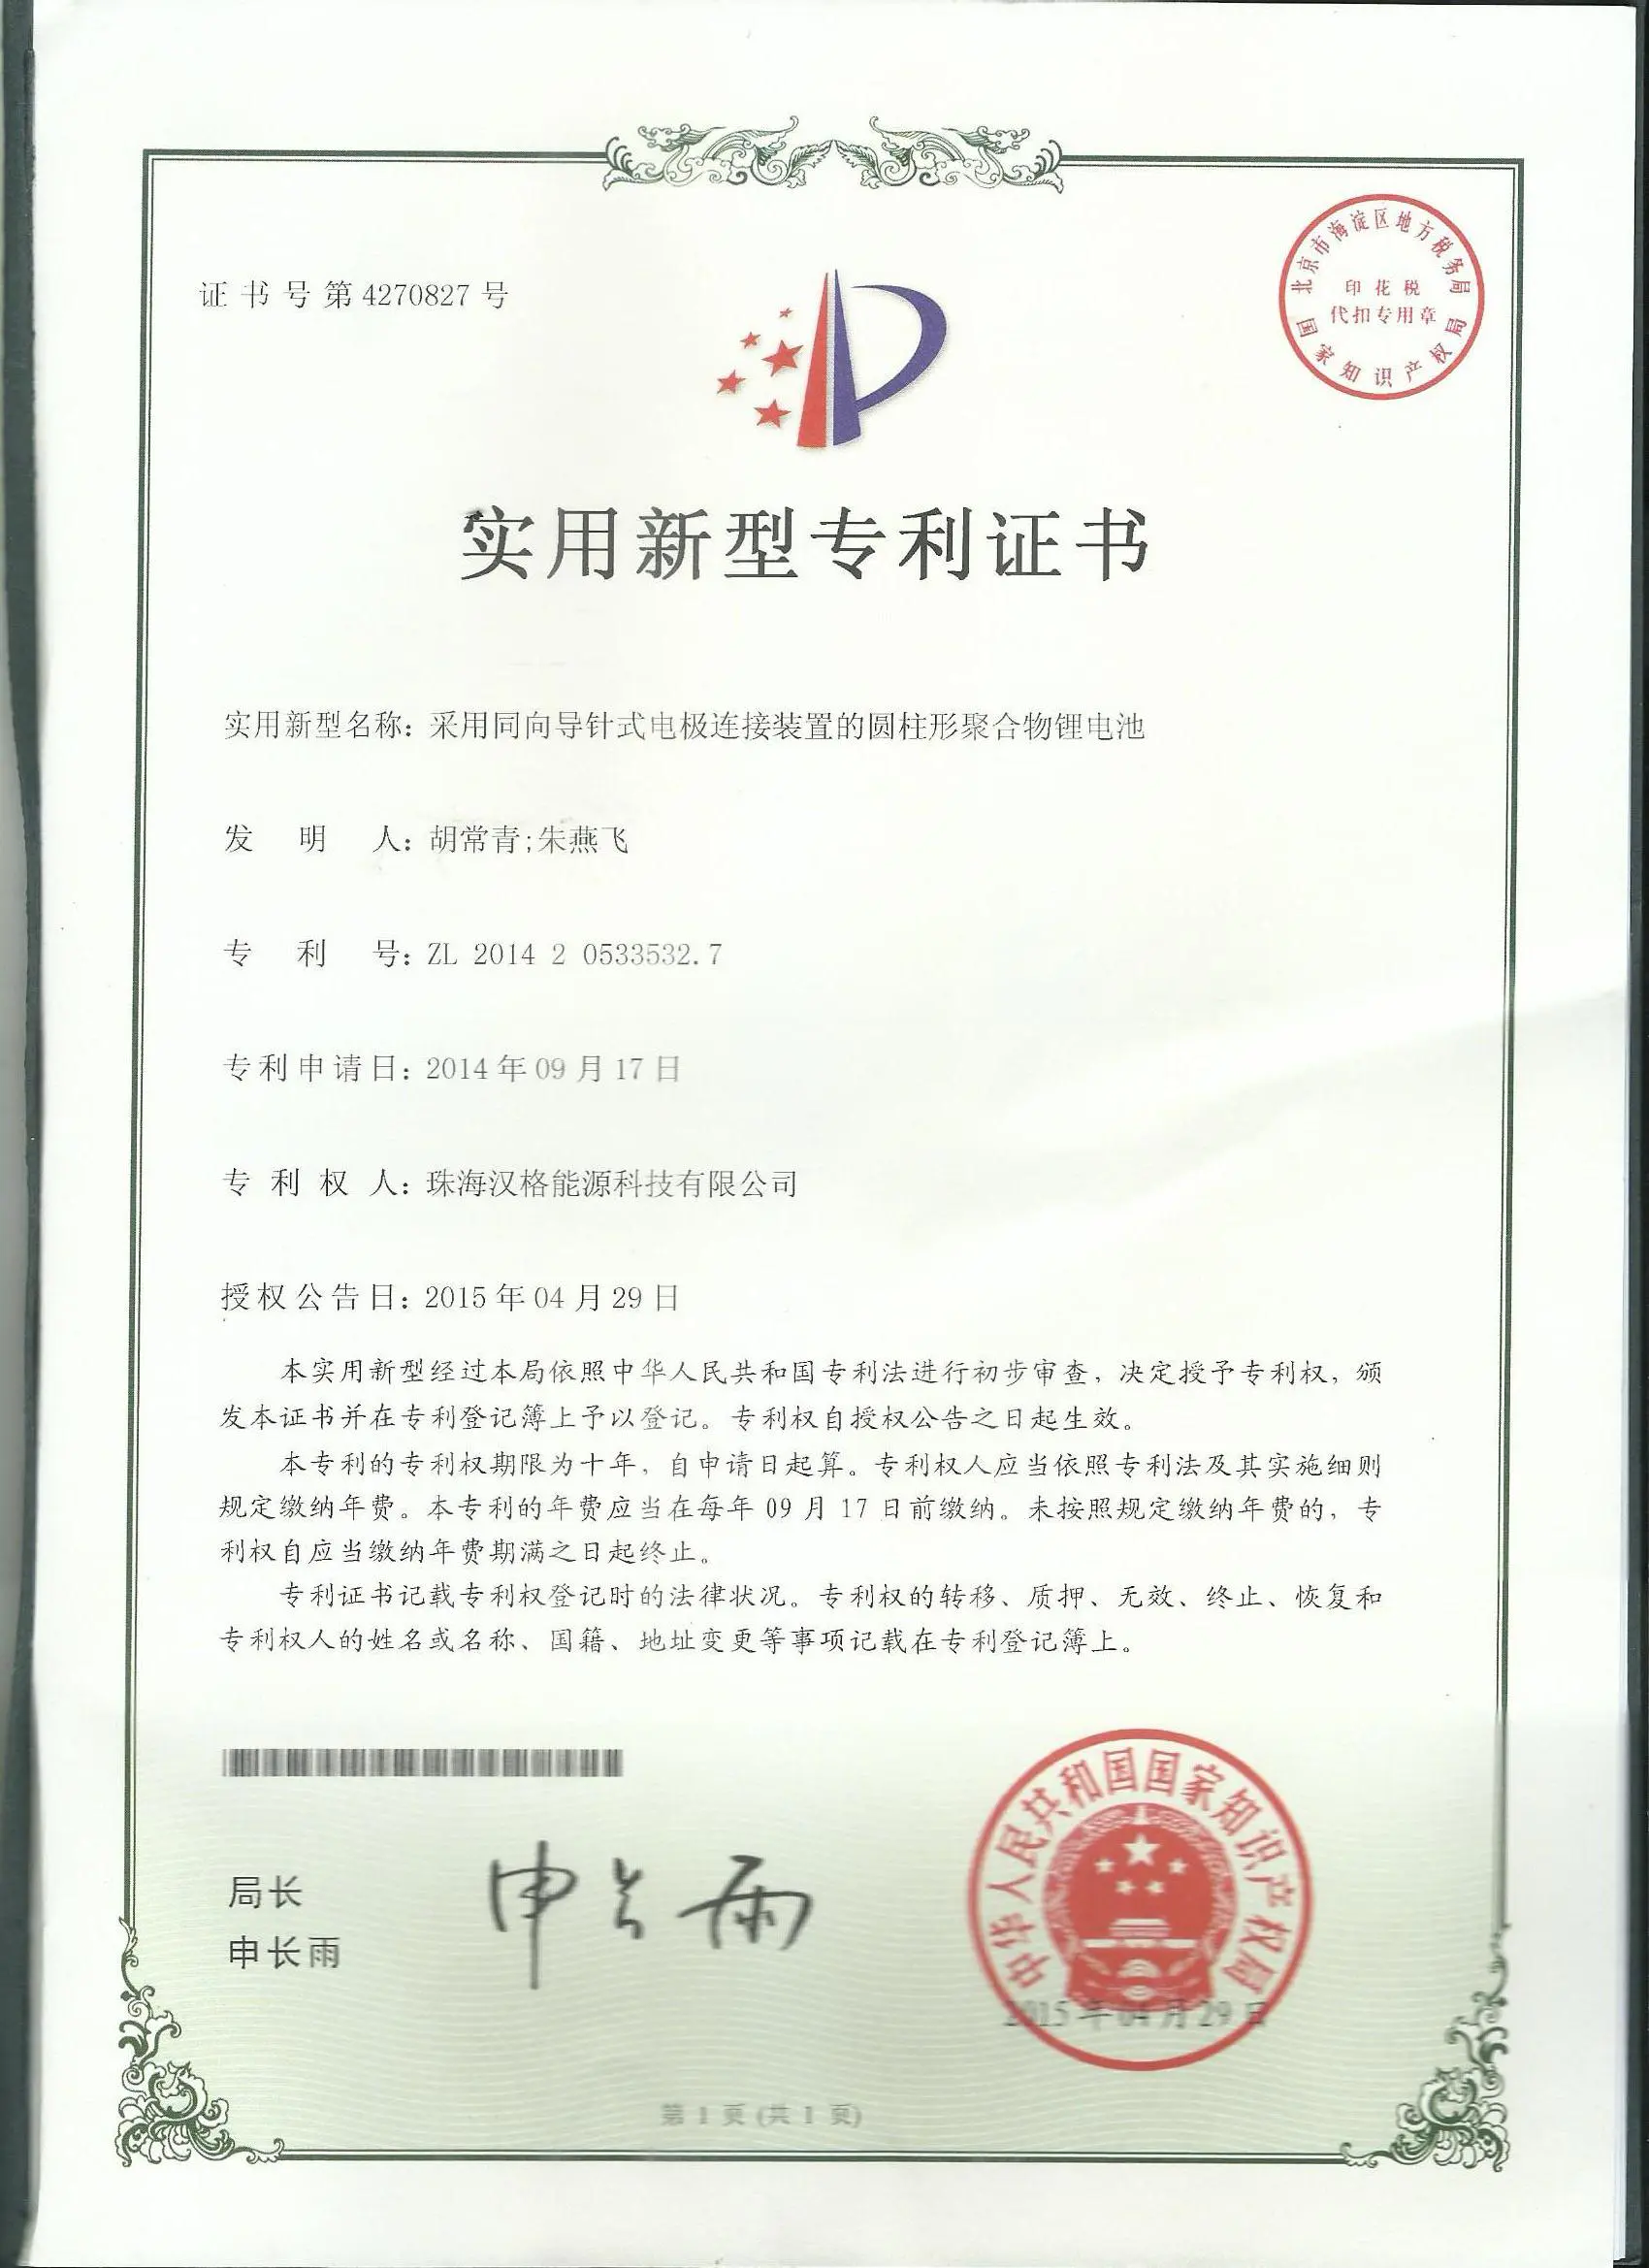 Appearance design patent certificate 1